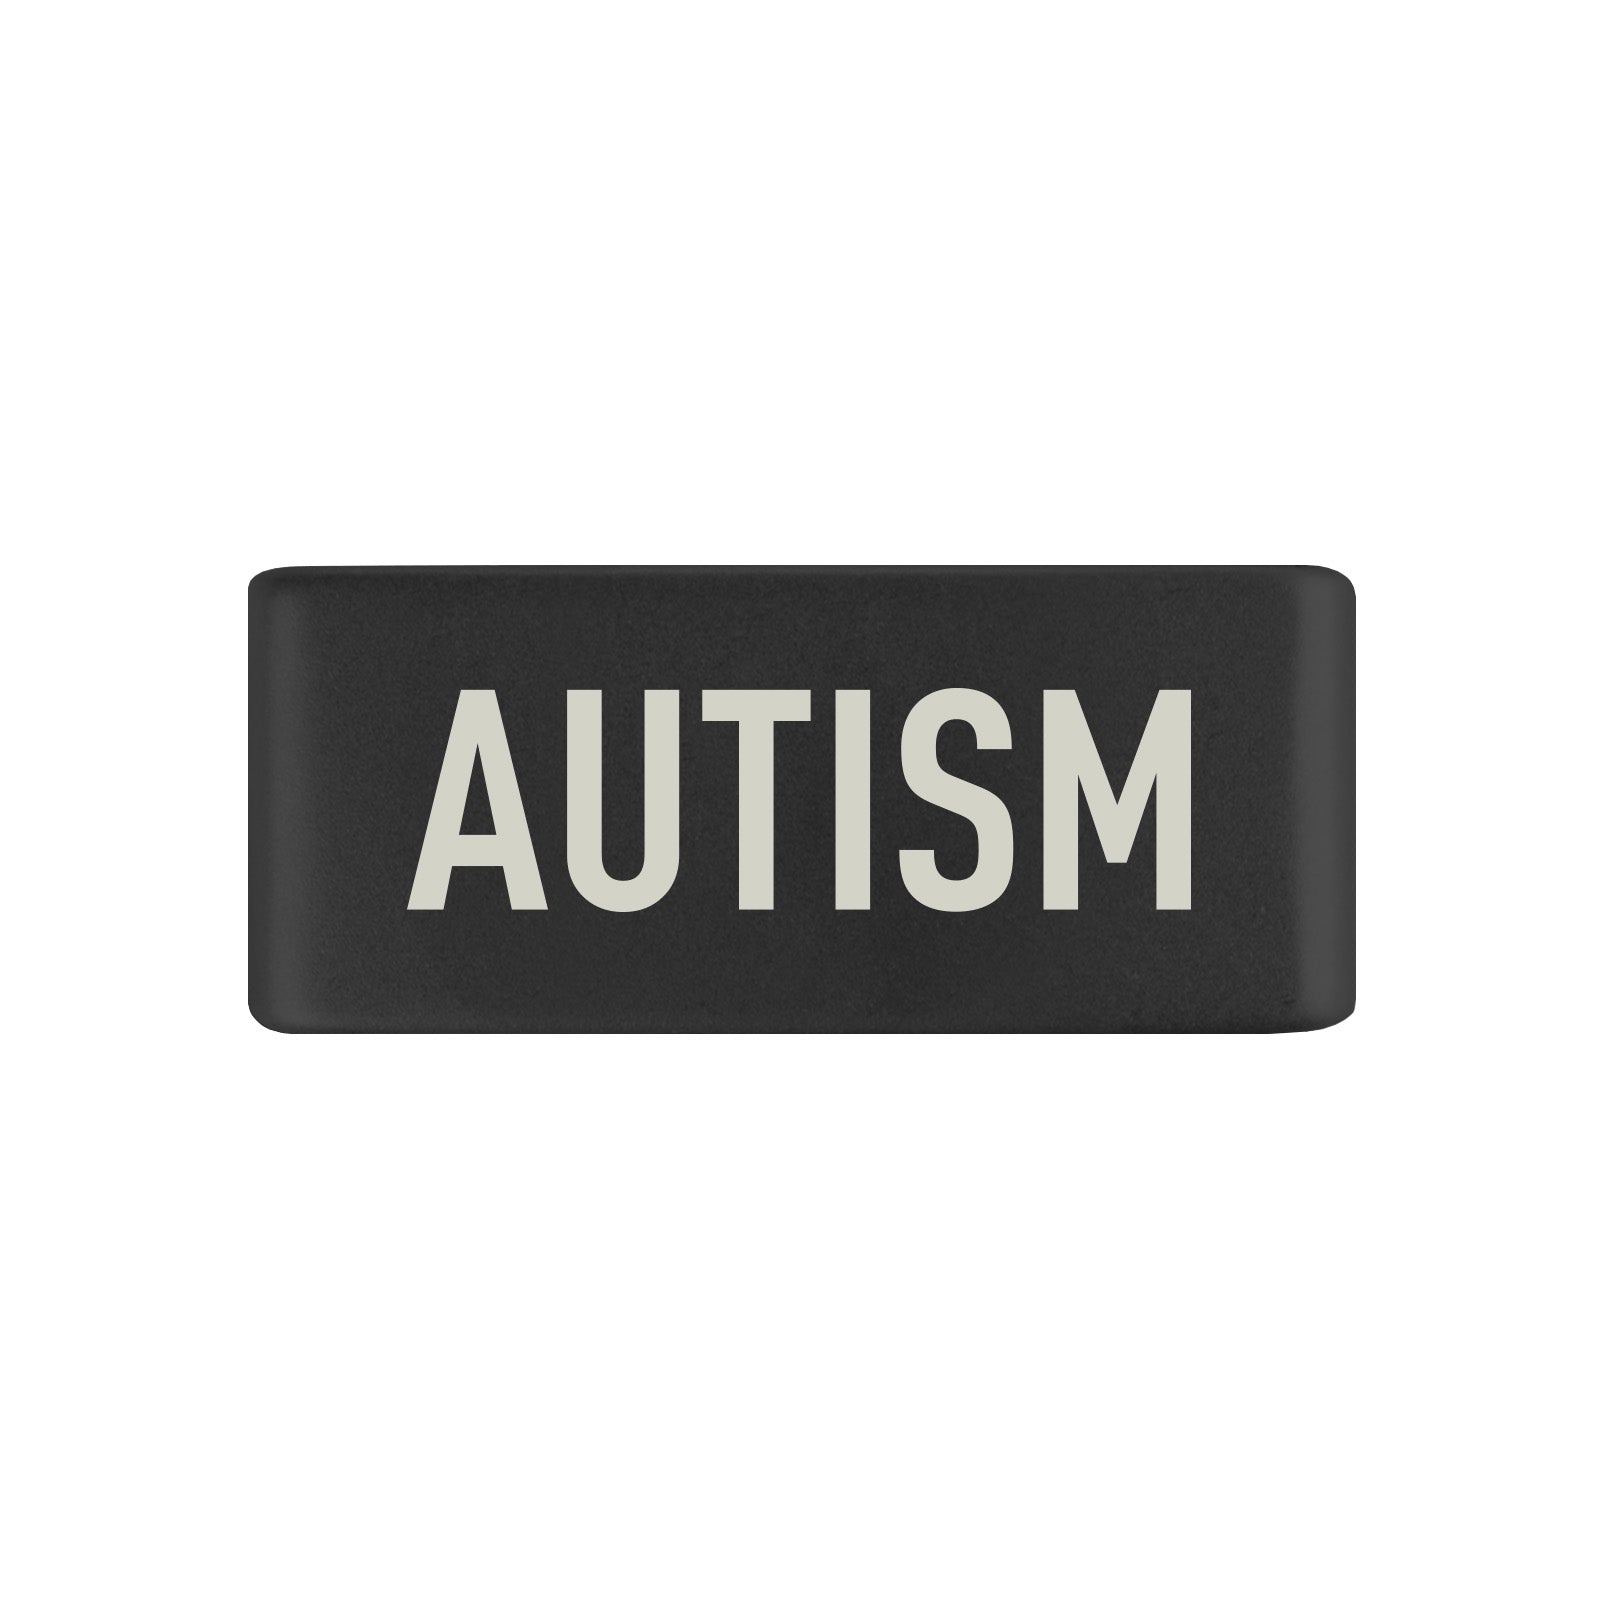 Autism Badge Badge 13mm - ROAD iD